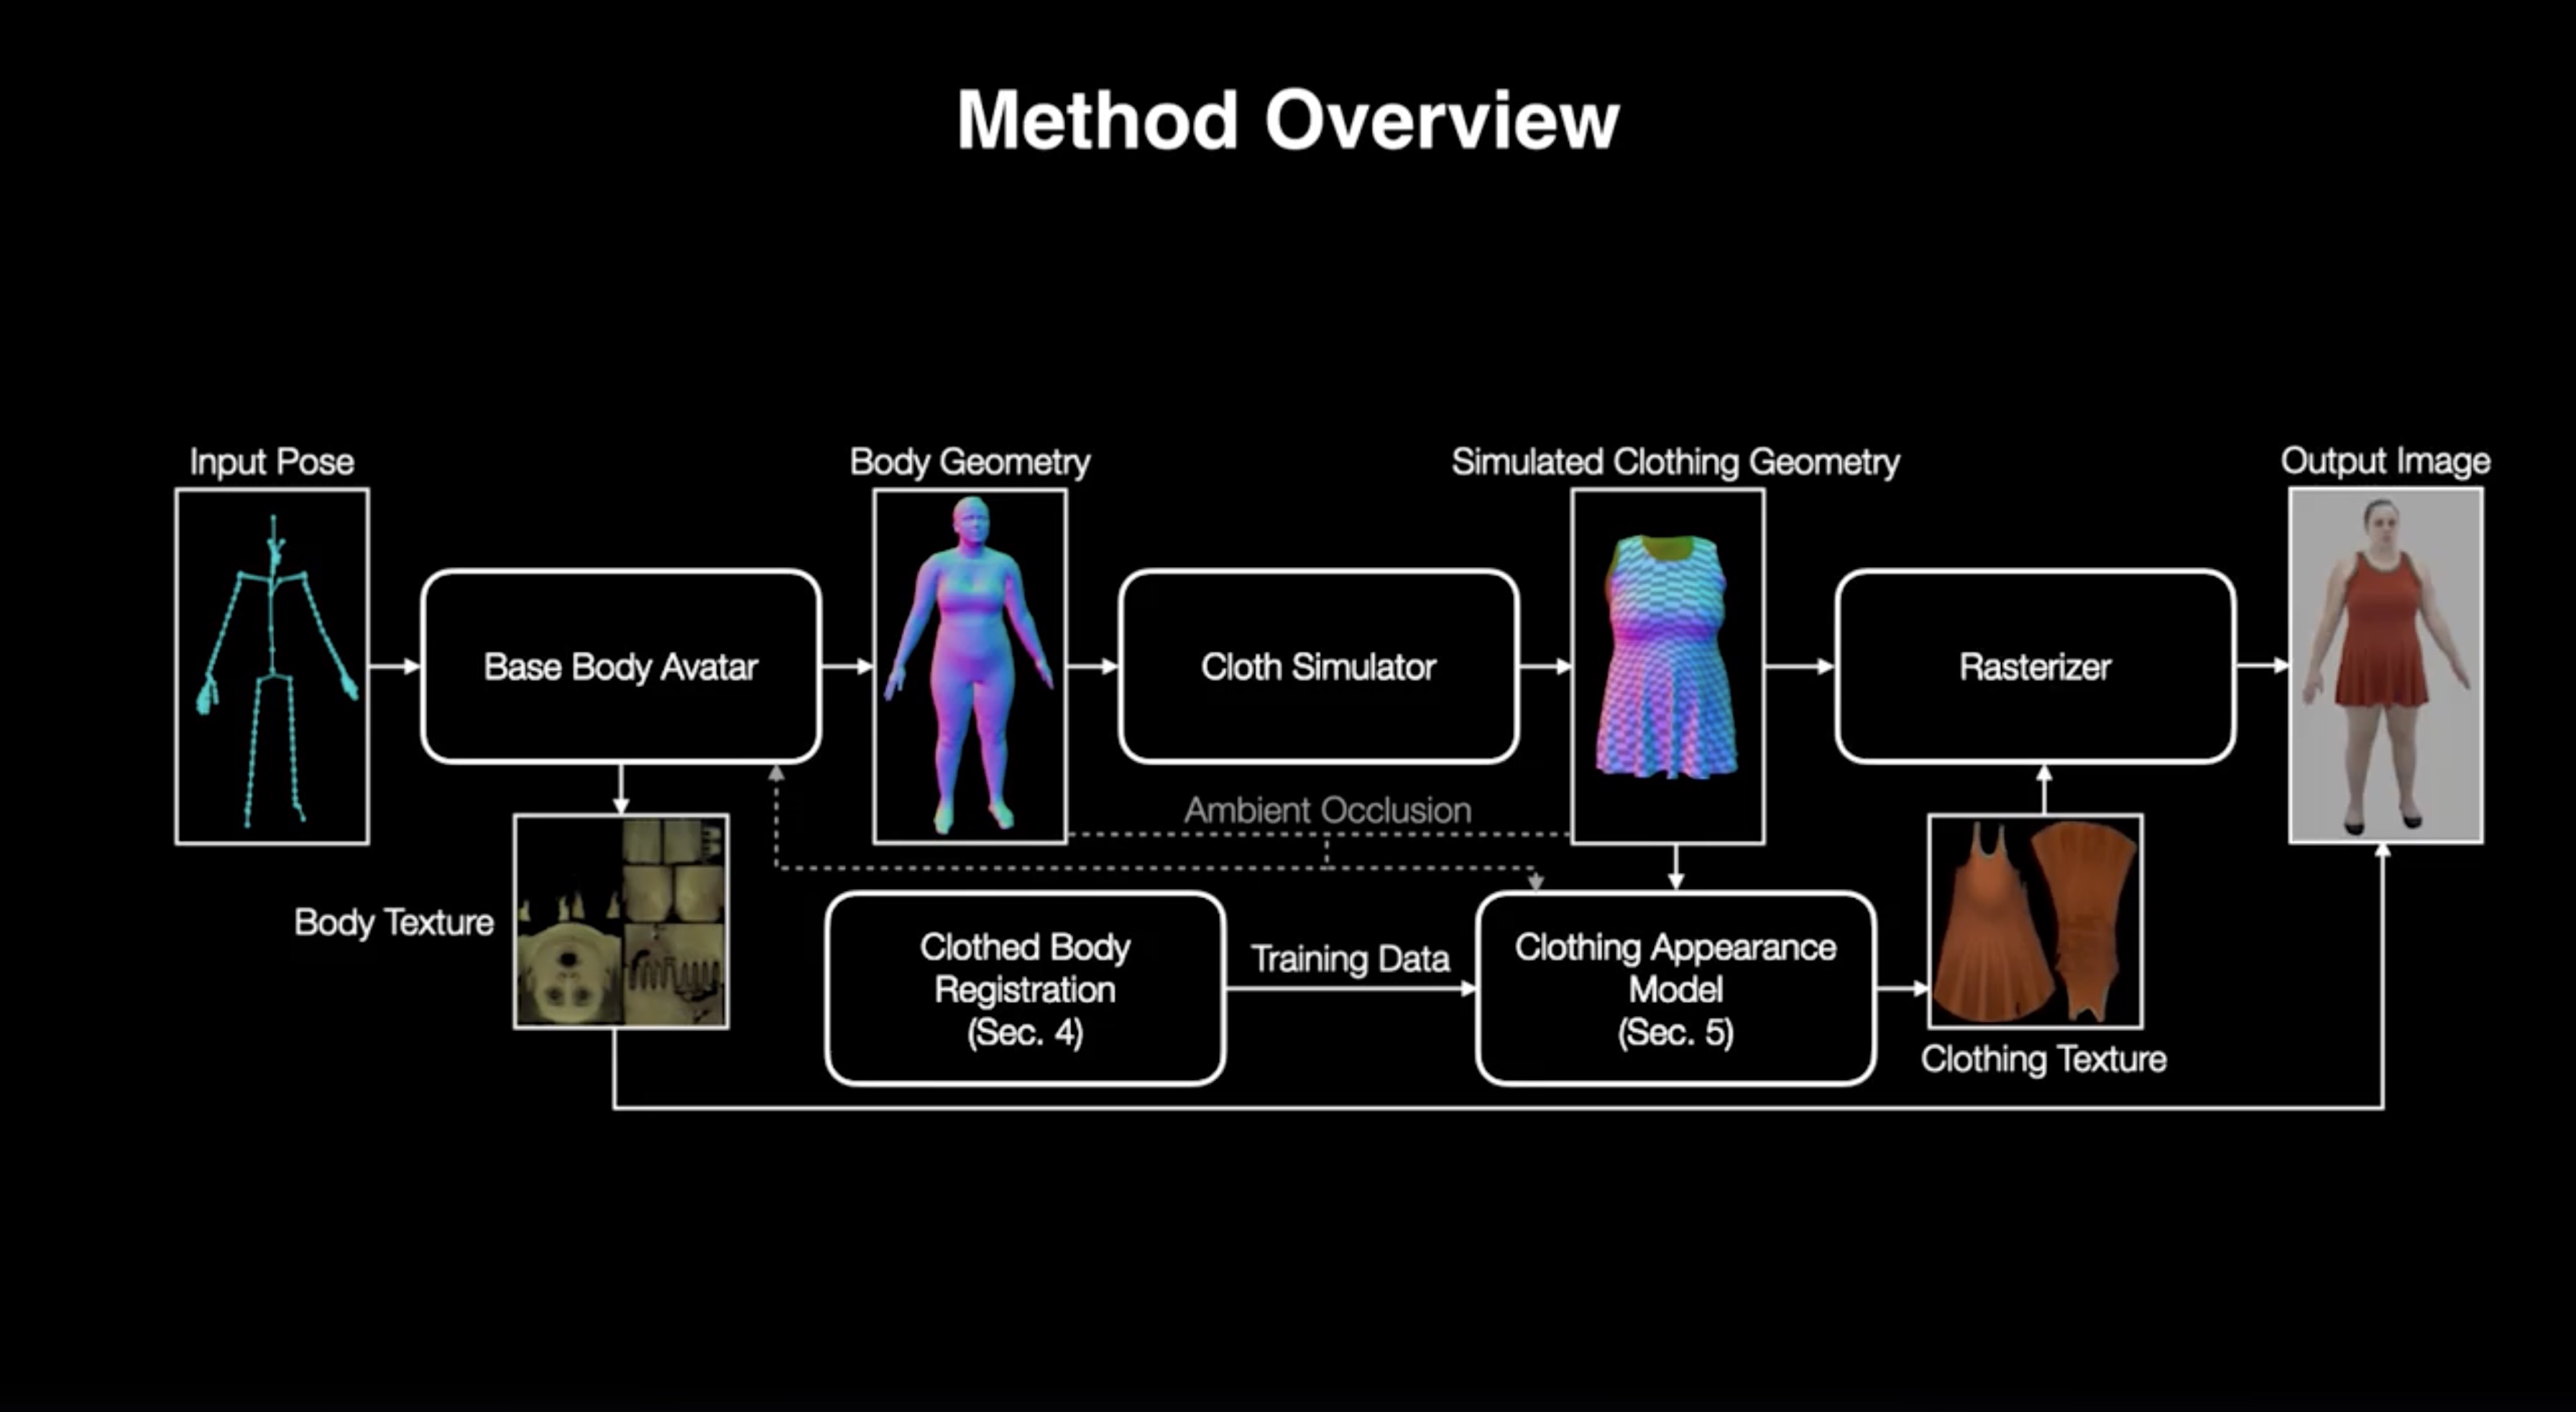 Meta Presented Photorealistic Clothing for Avatars